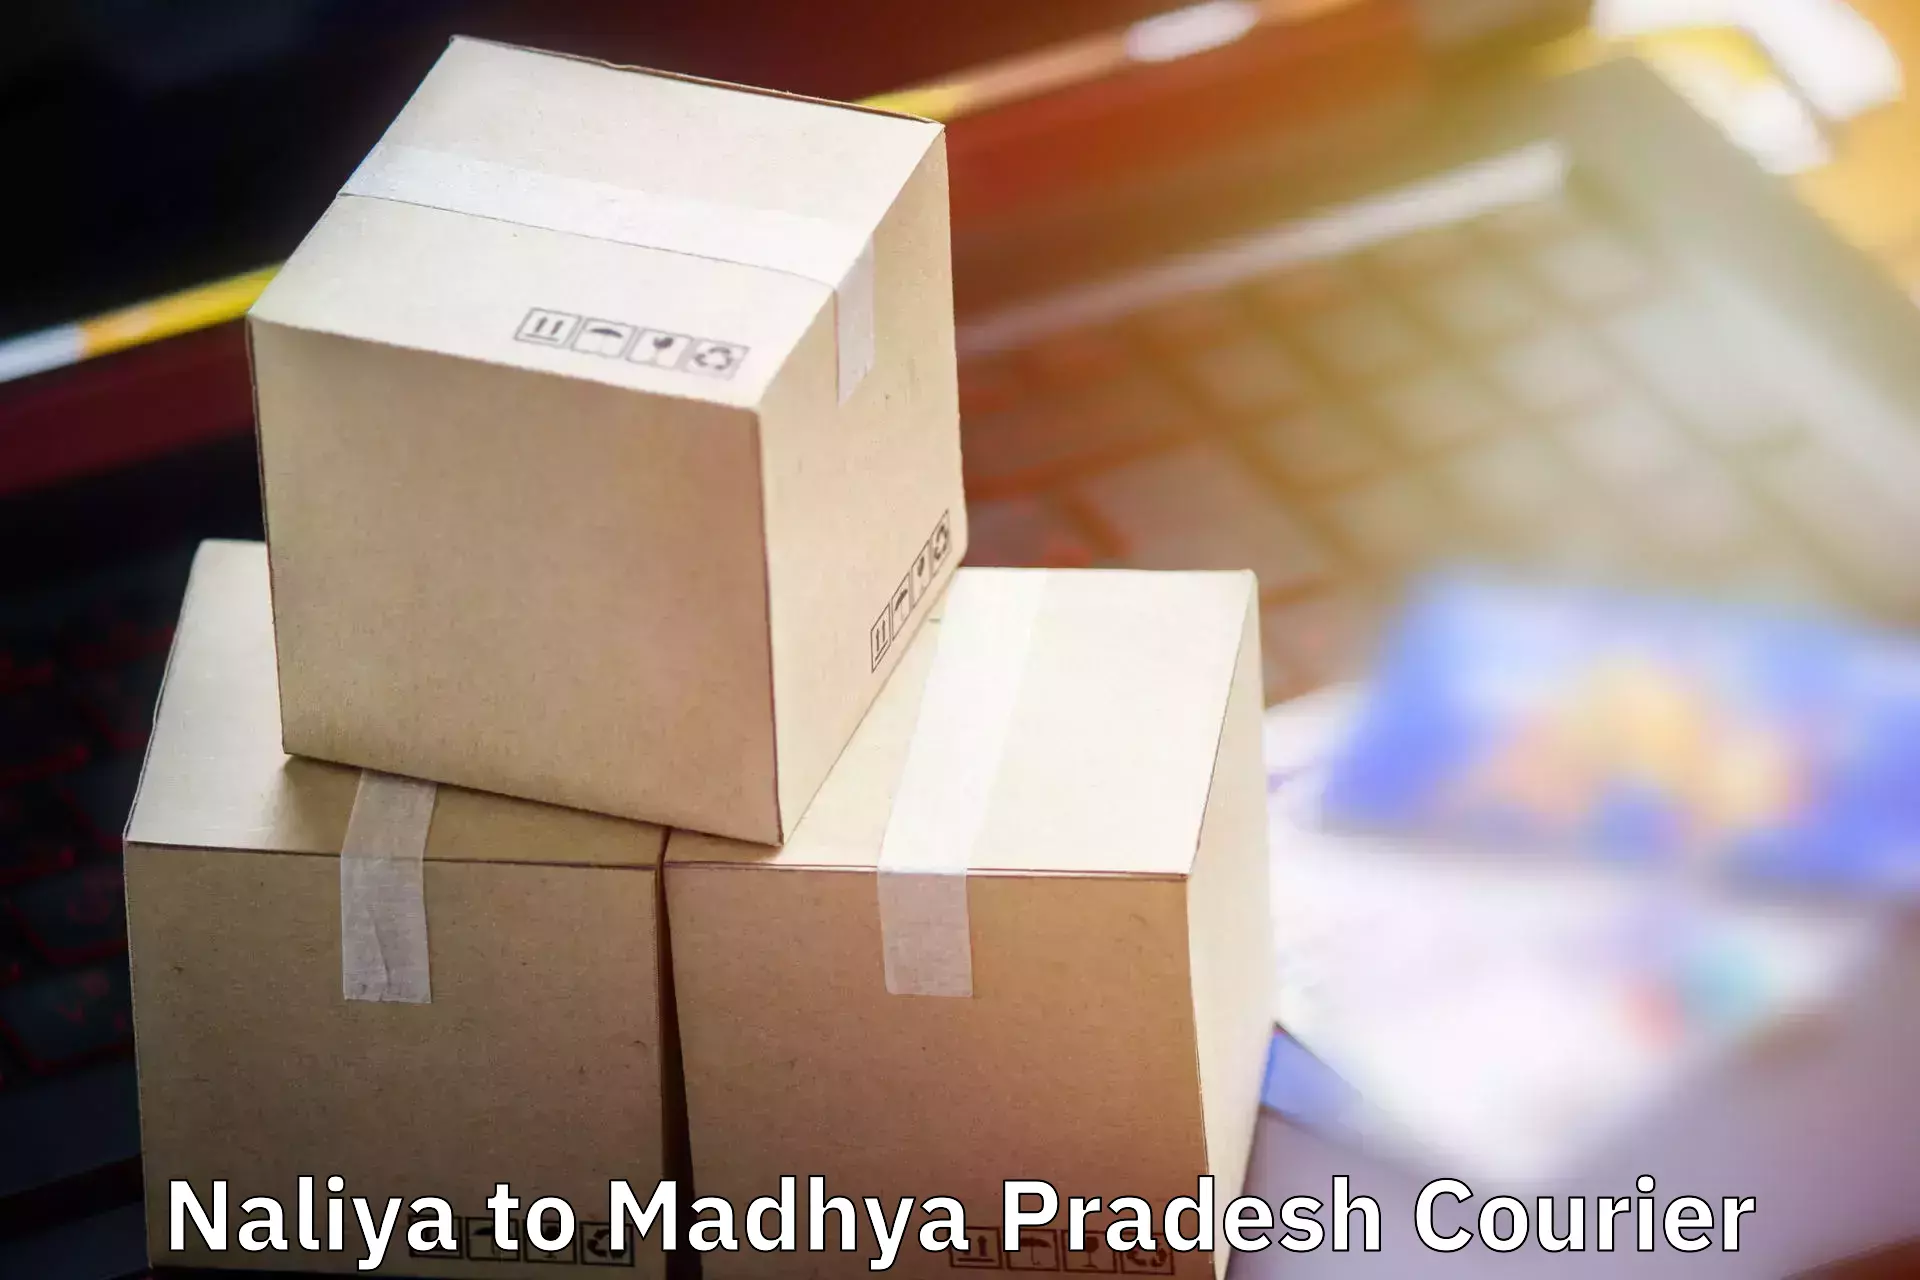 Baggage relocation service Naliya to Sendhwa